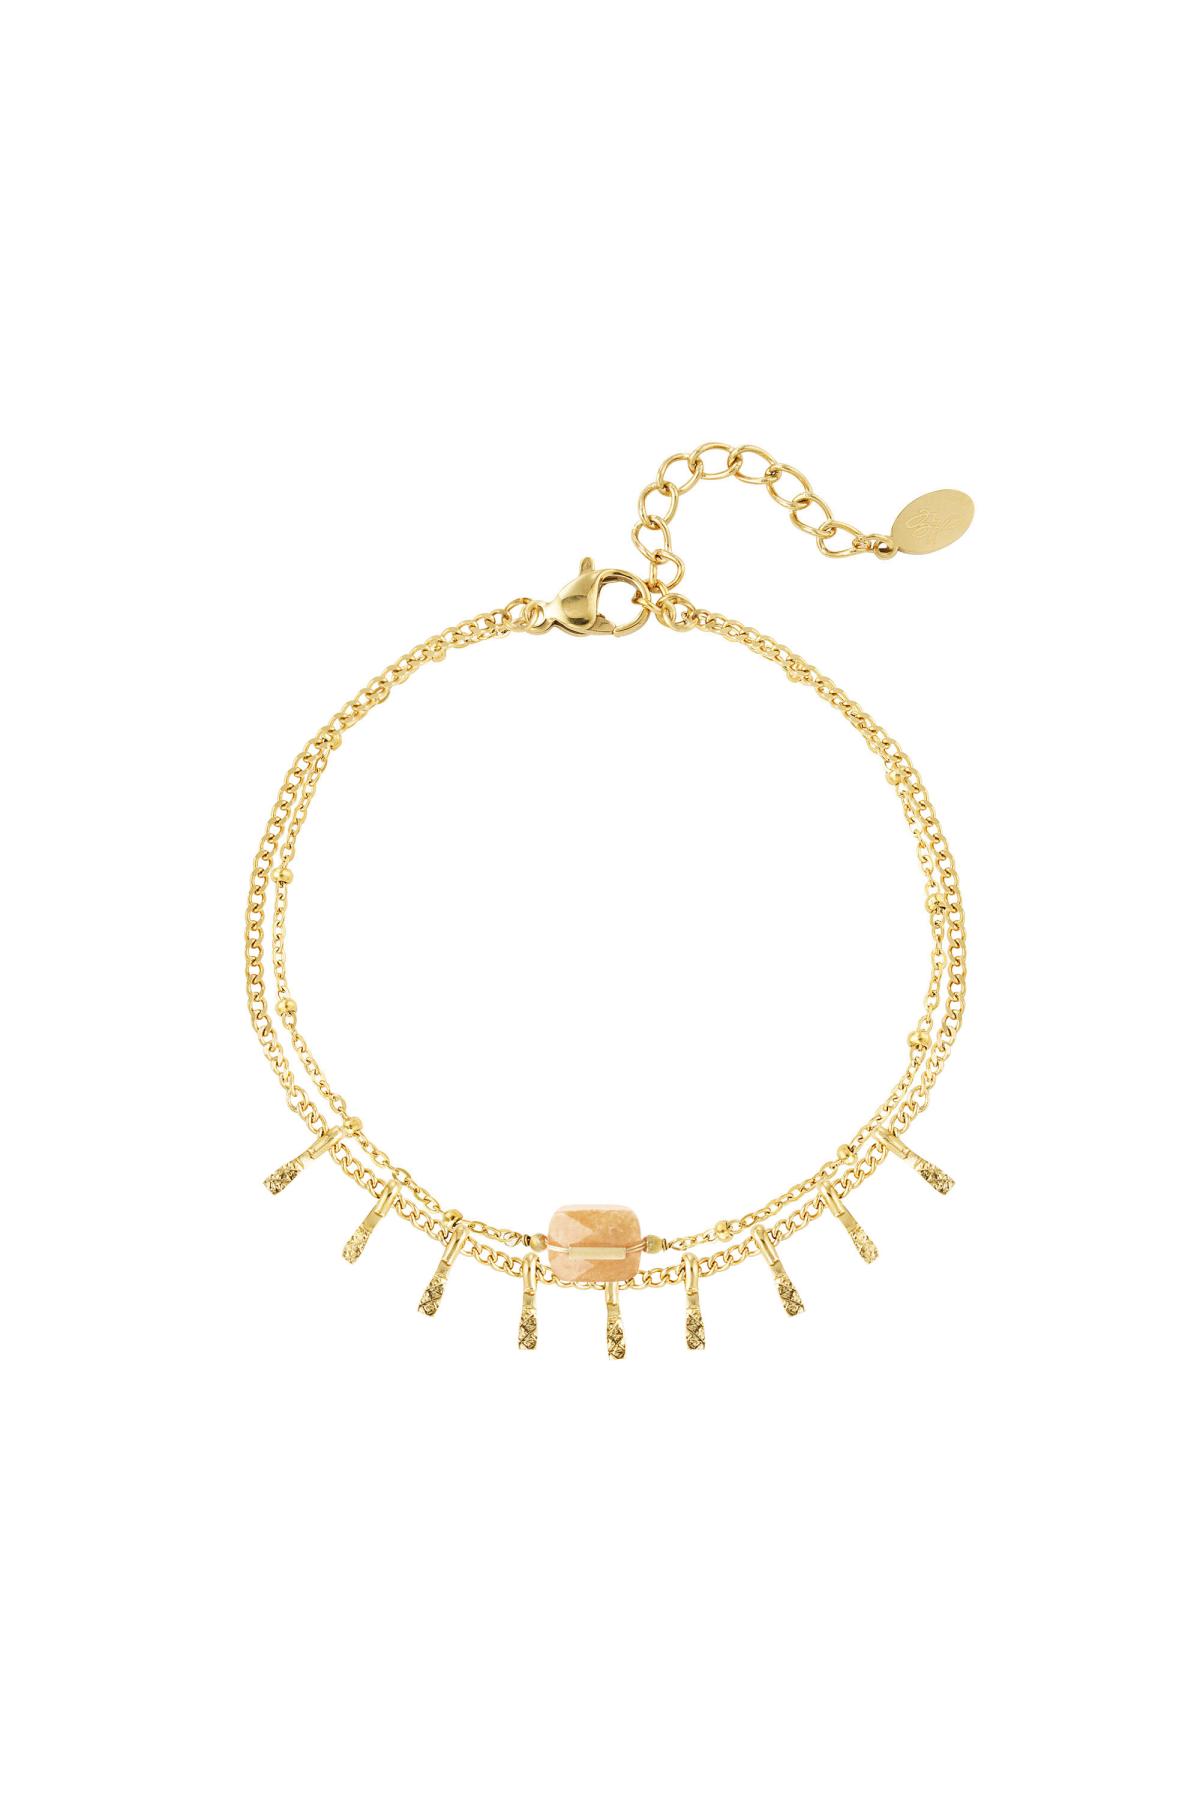 Bracelet with details - Natural stones collection Orange & Gold 